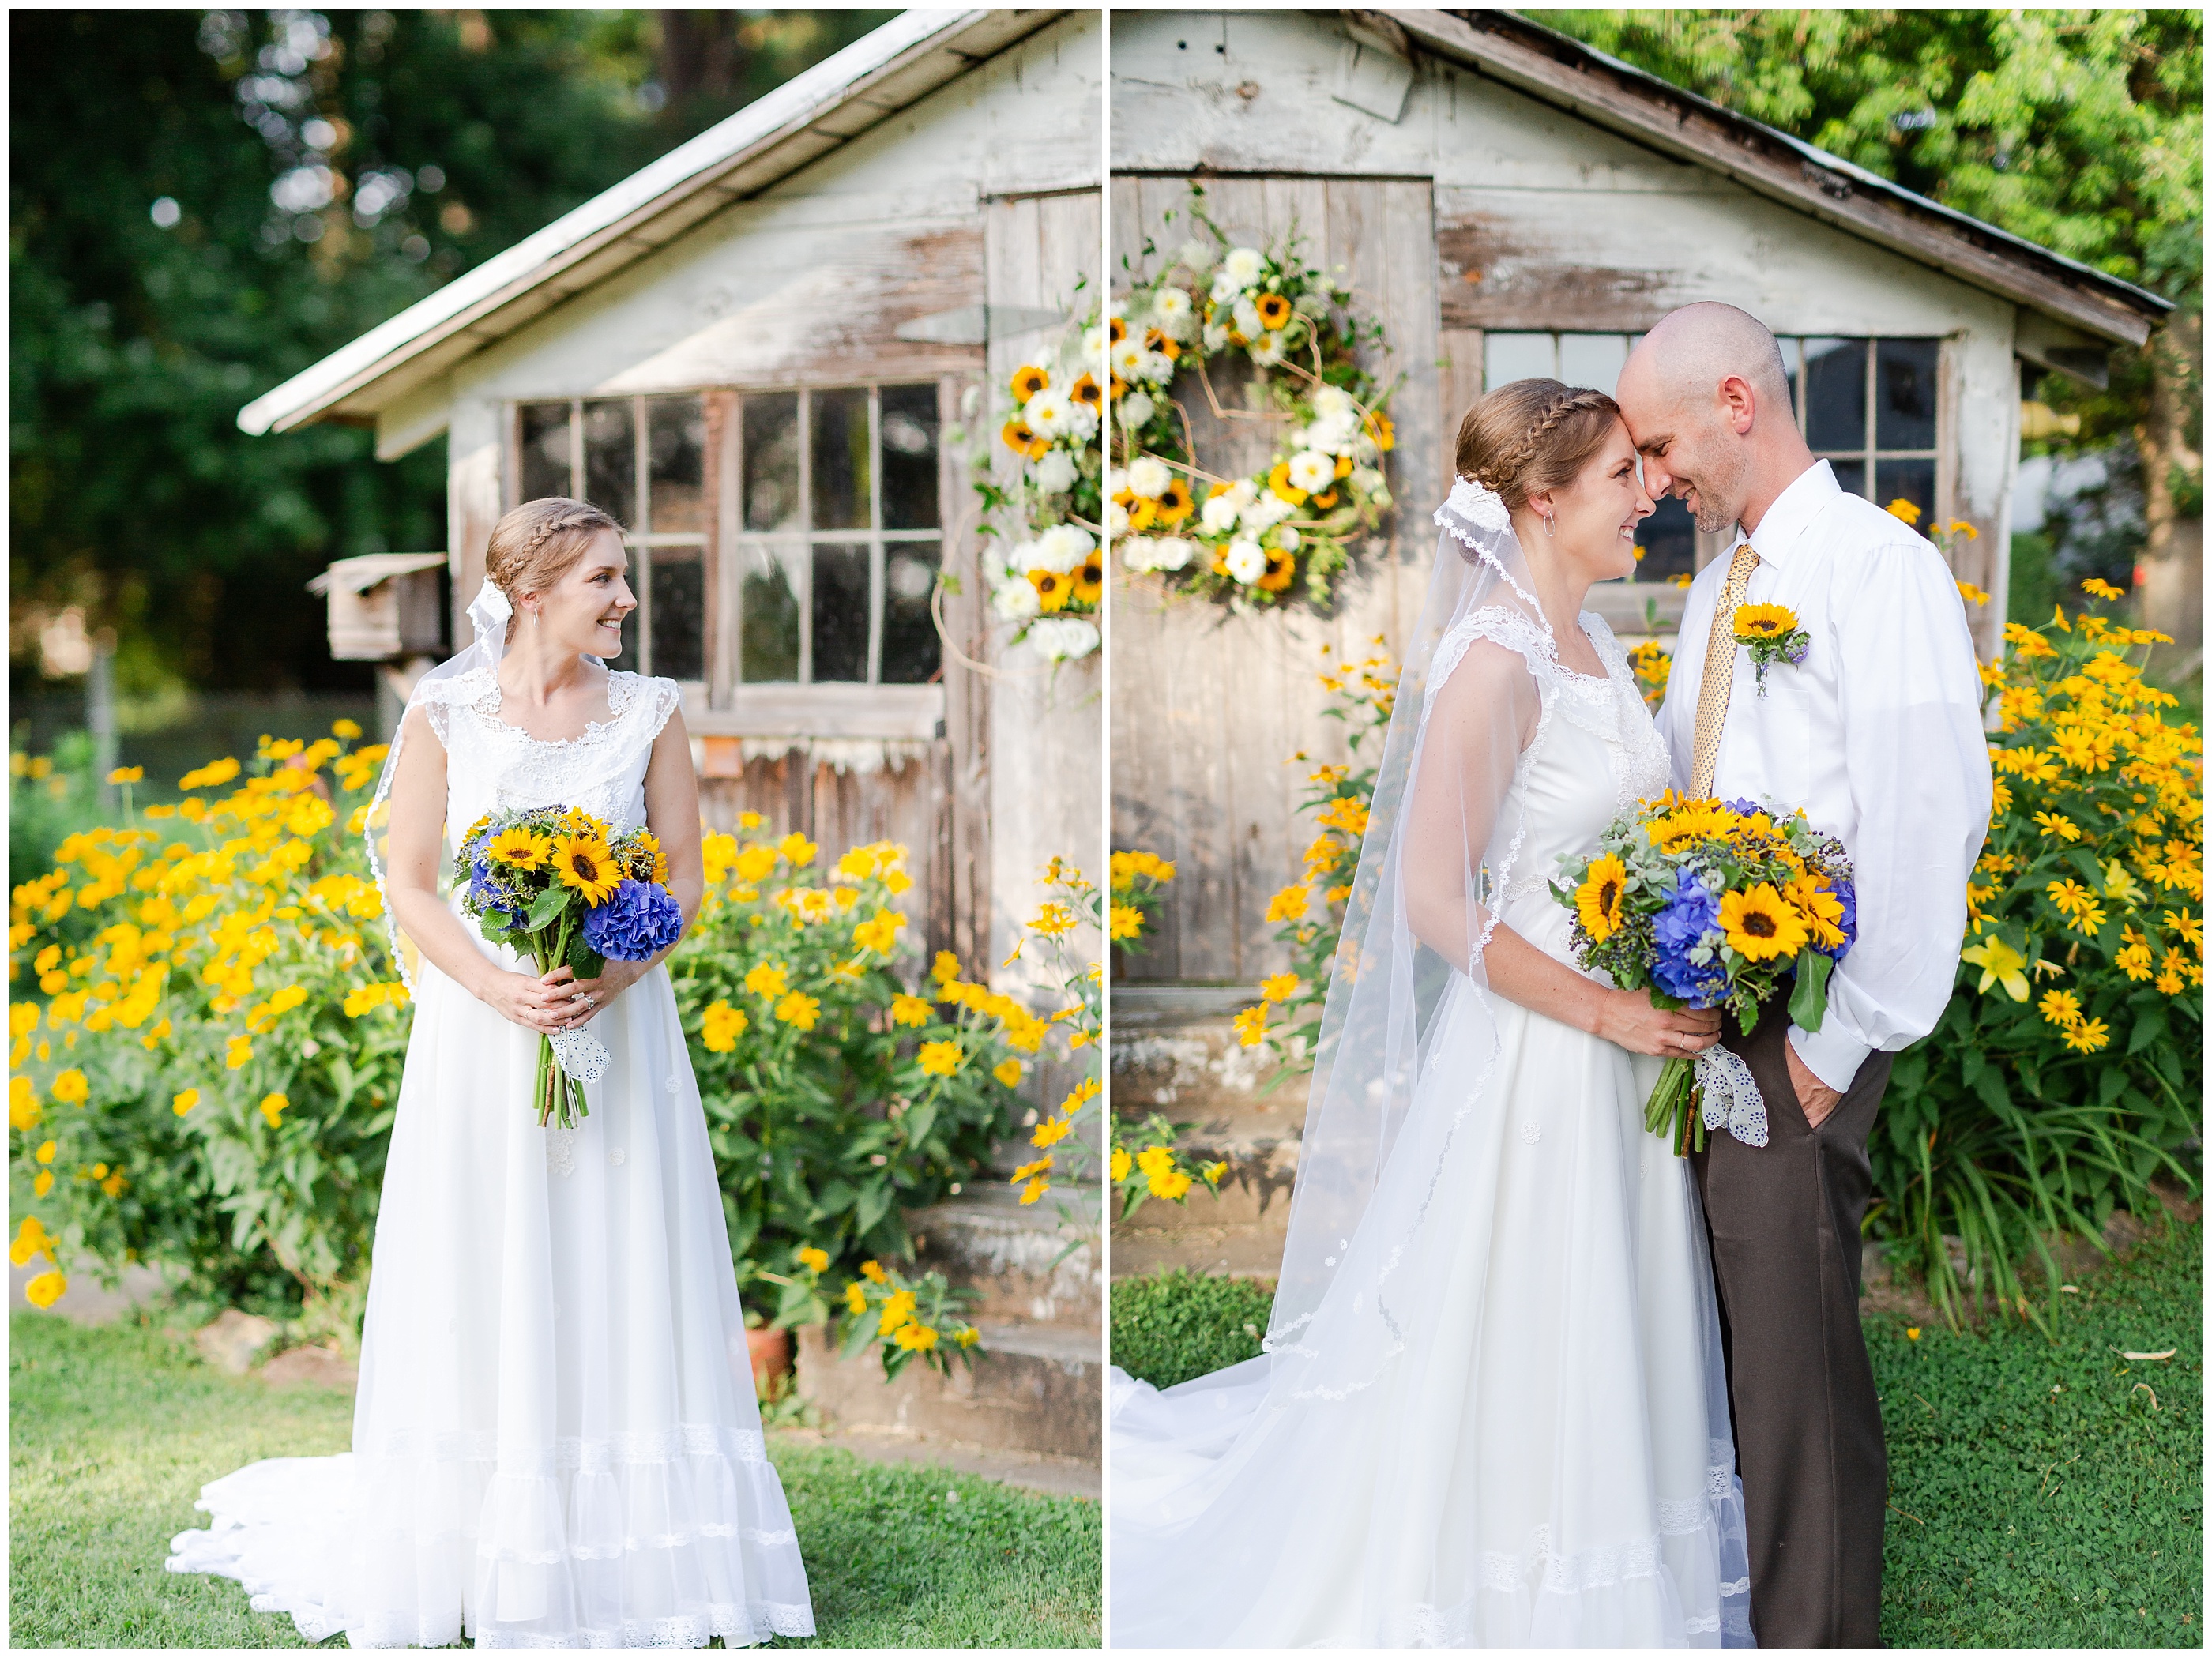 Small Backyard Wedding Ceremony | Virginia Wedding ...